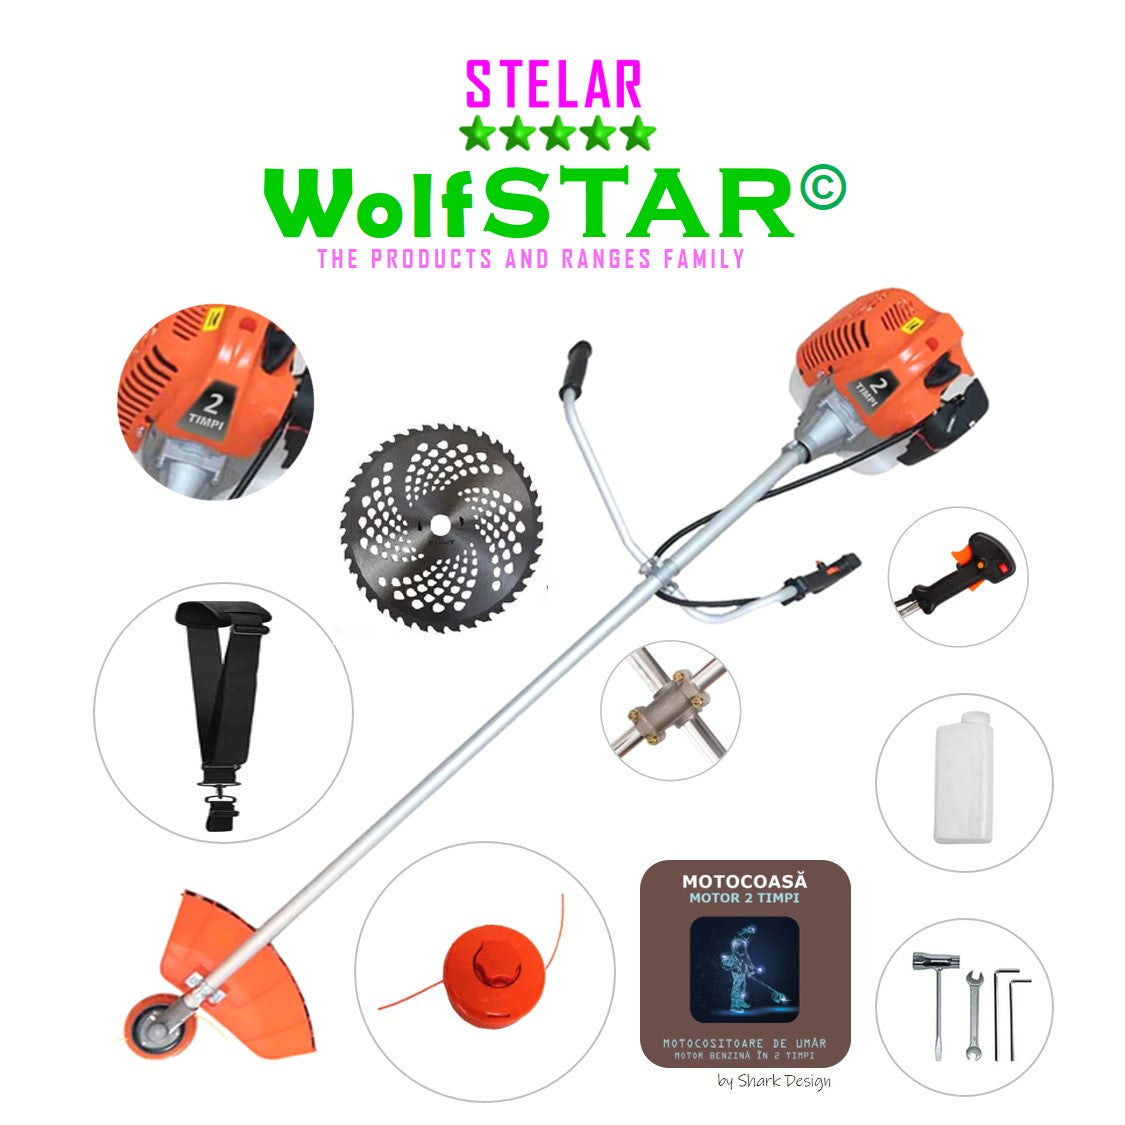 Motocoasa WolfStar Stelar cu motor pe benzina in 2 timpi, 6 CP, 52 cc, Portocalie, sistem taiere cu tambur plus accesorii